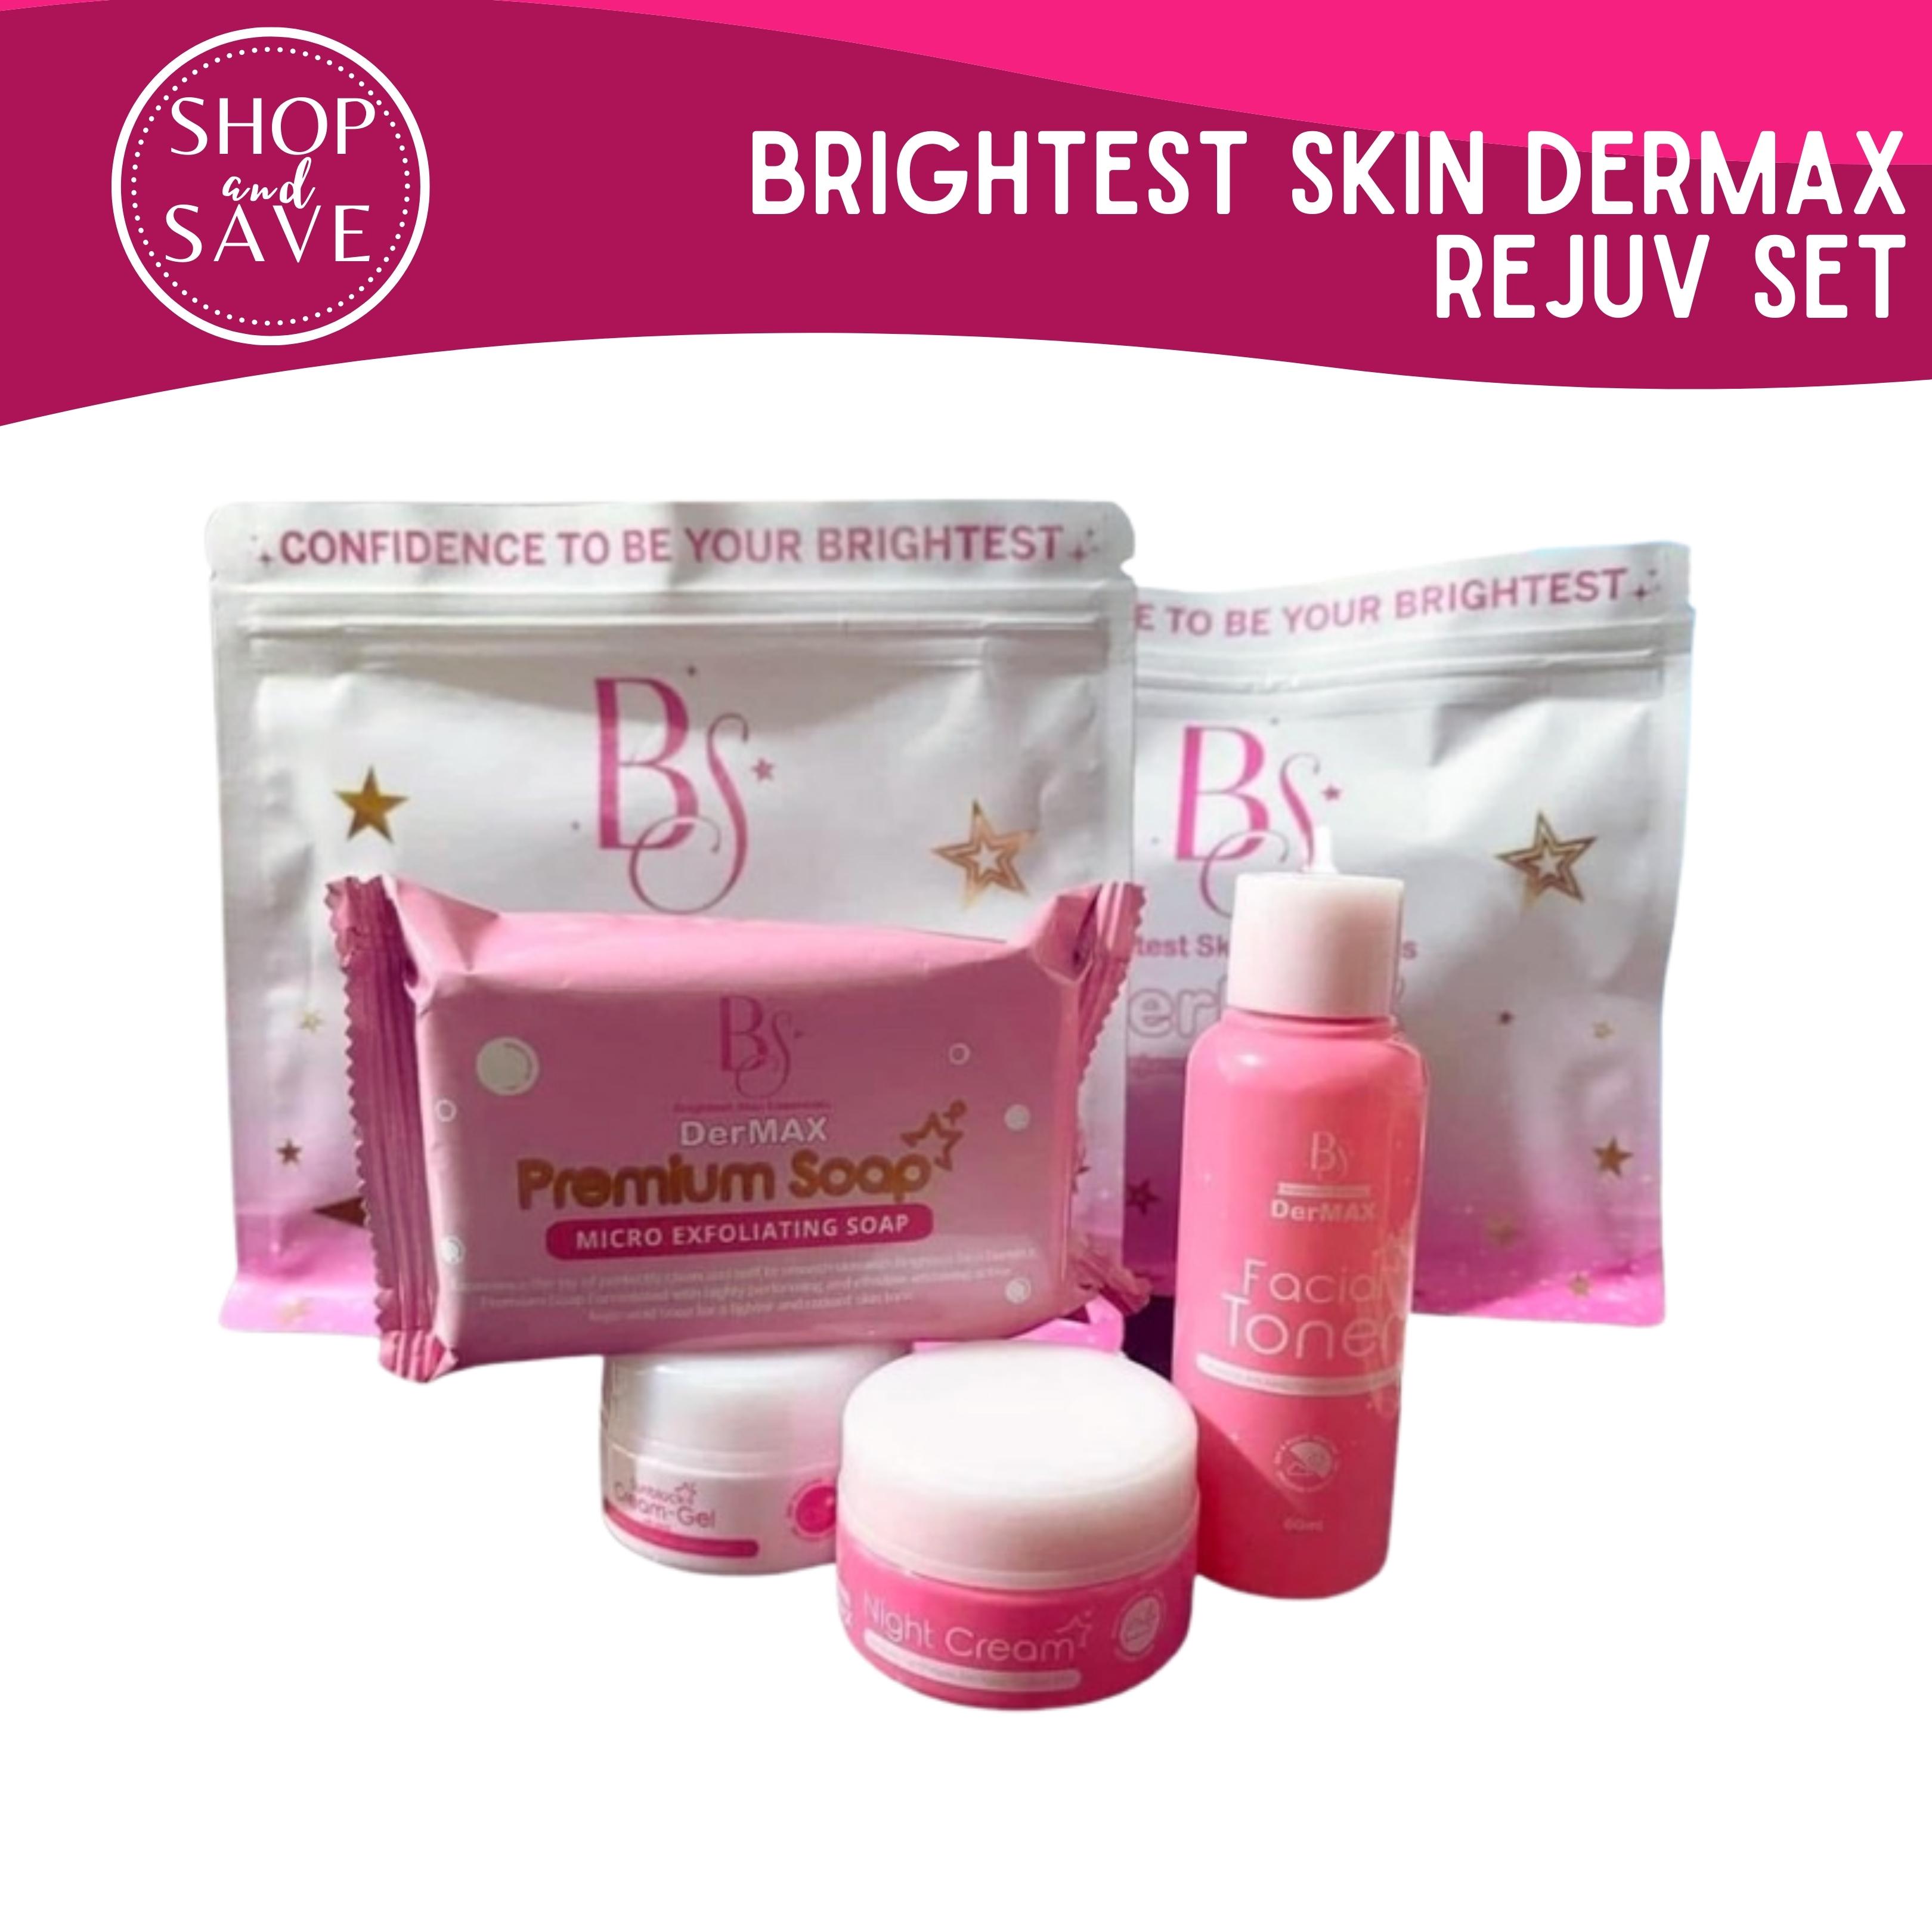 Brightest Skin Essentials Rejuvenating Derma Set